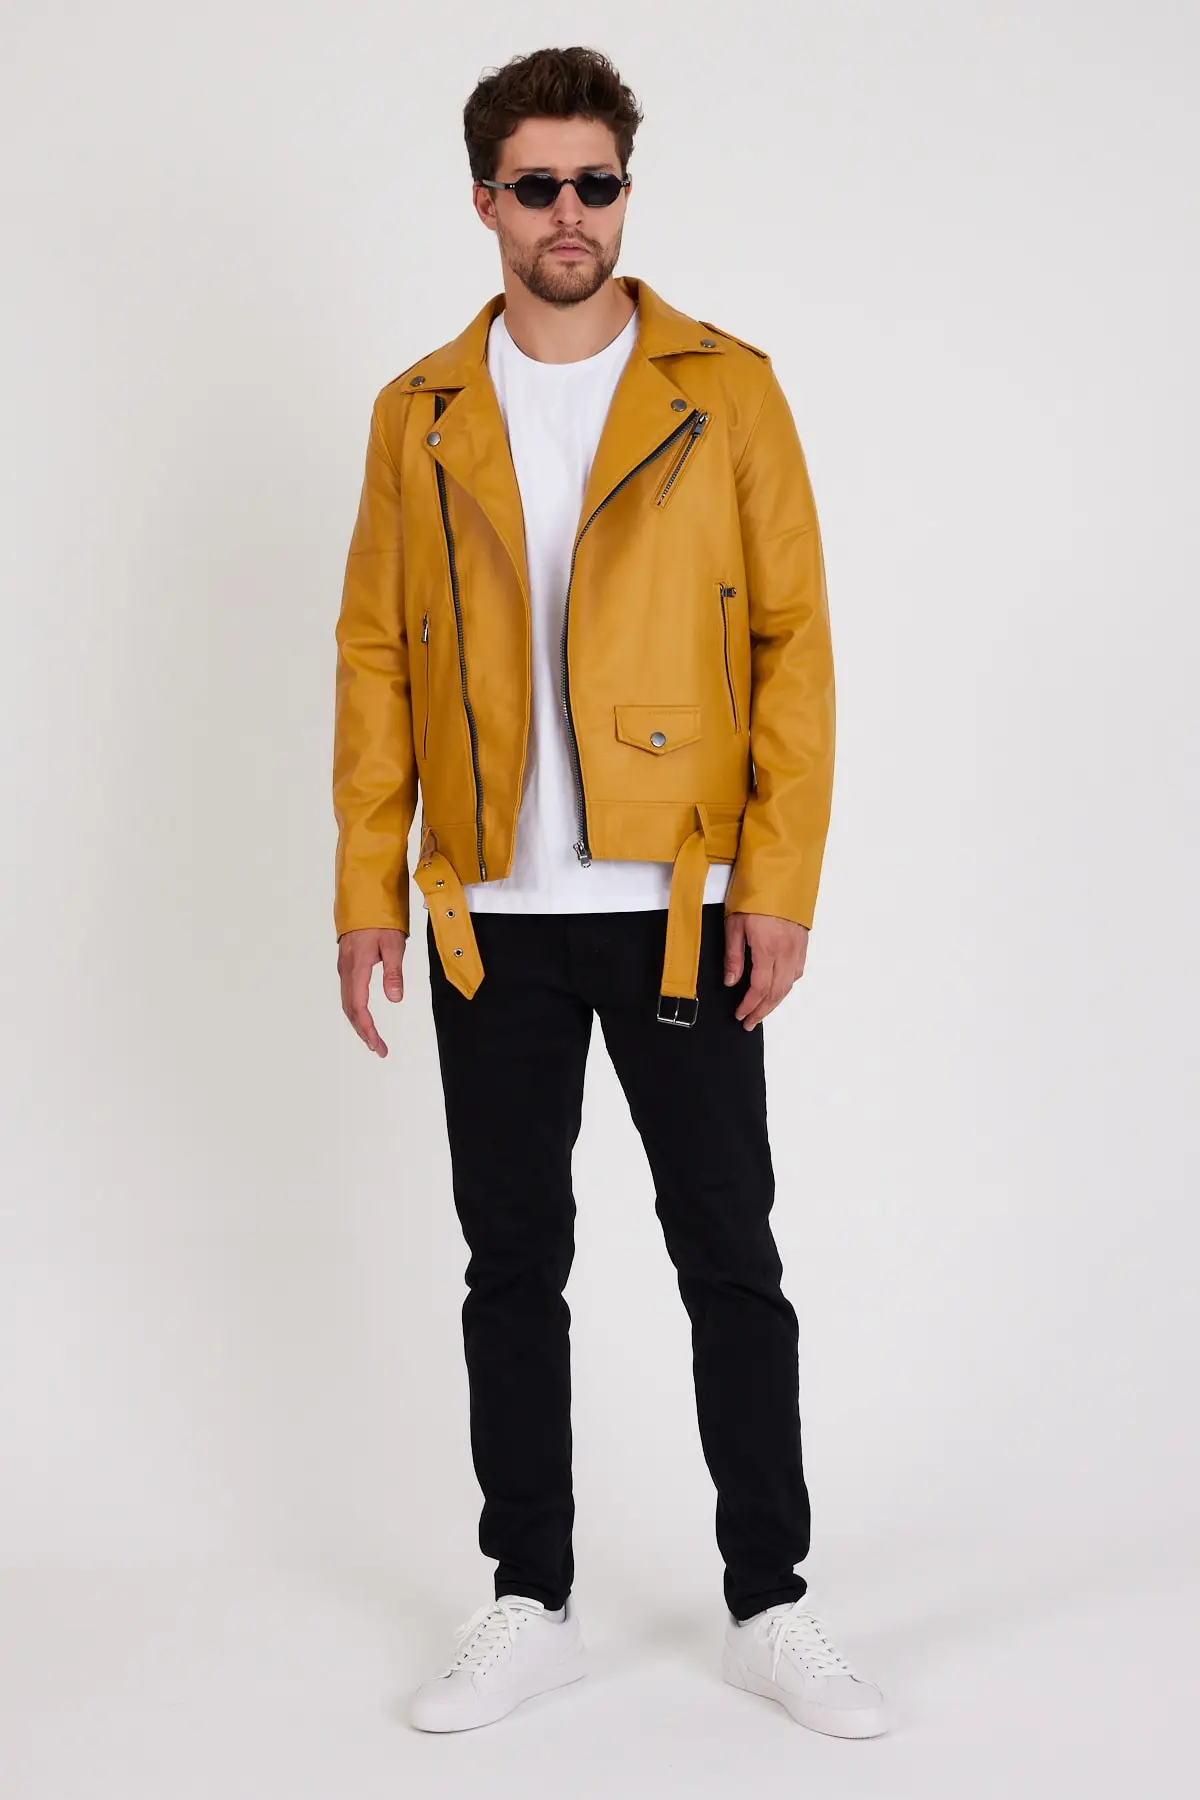 Men's Yellow Color New Season Capraz Zippered Leather Jacket Coat